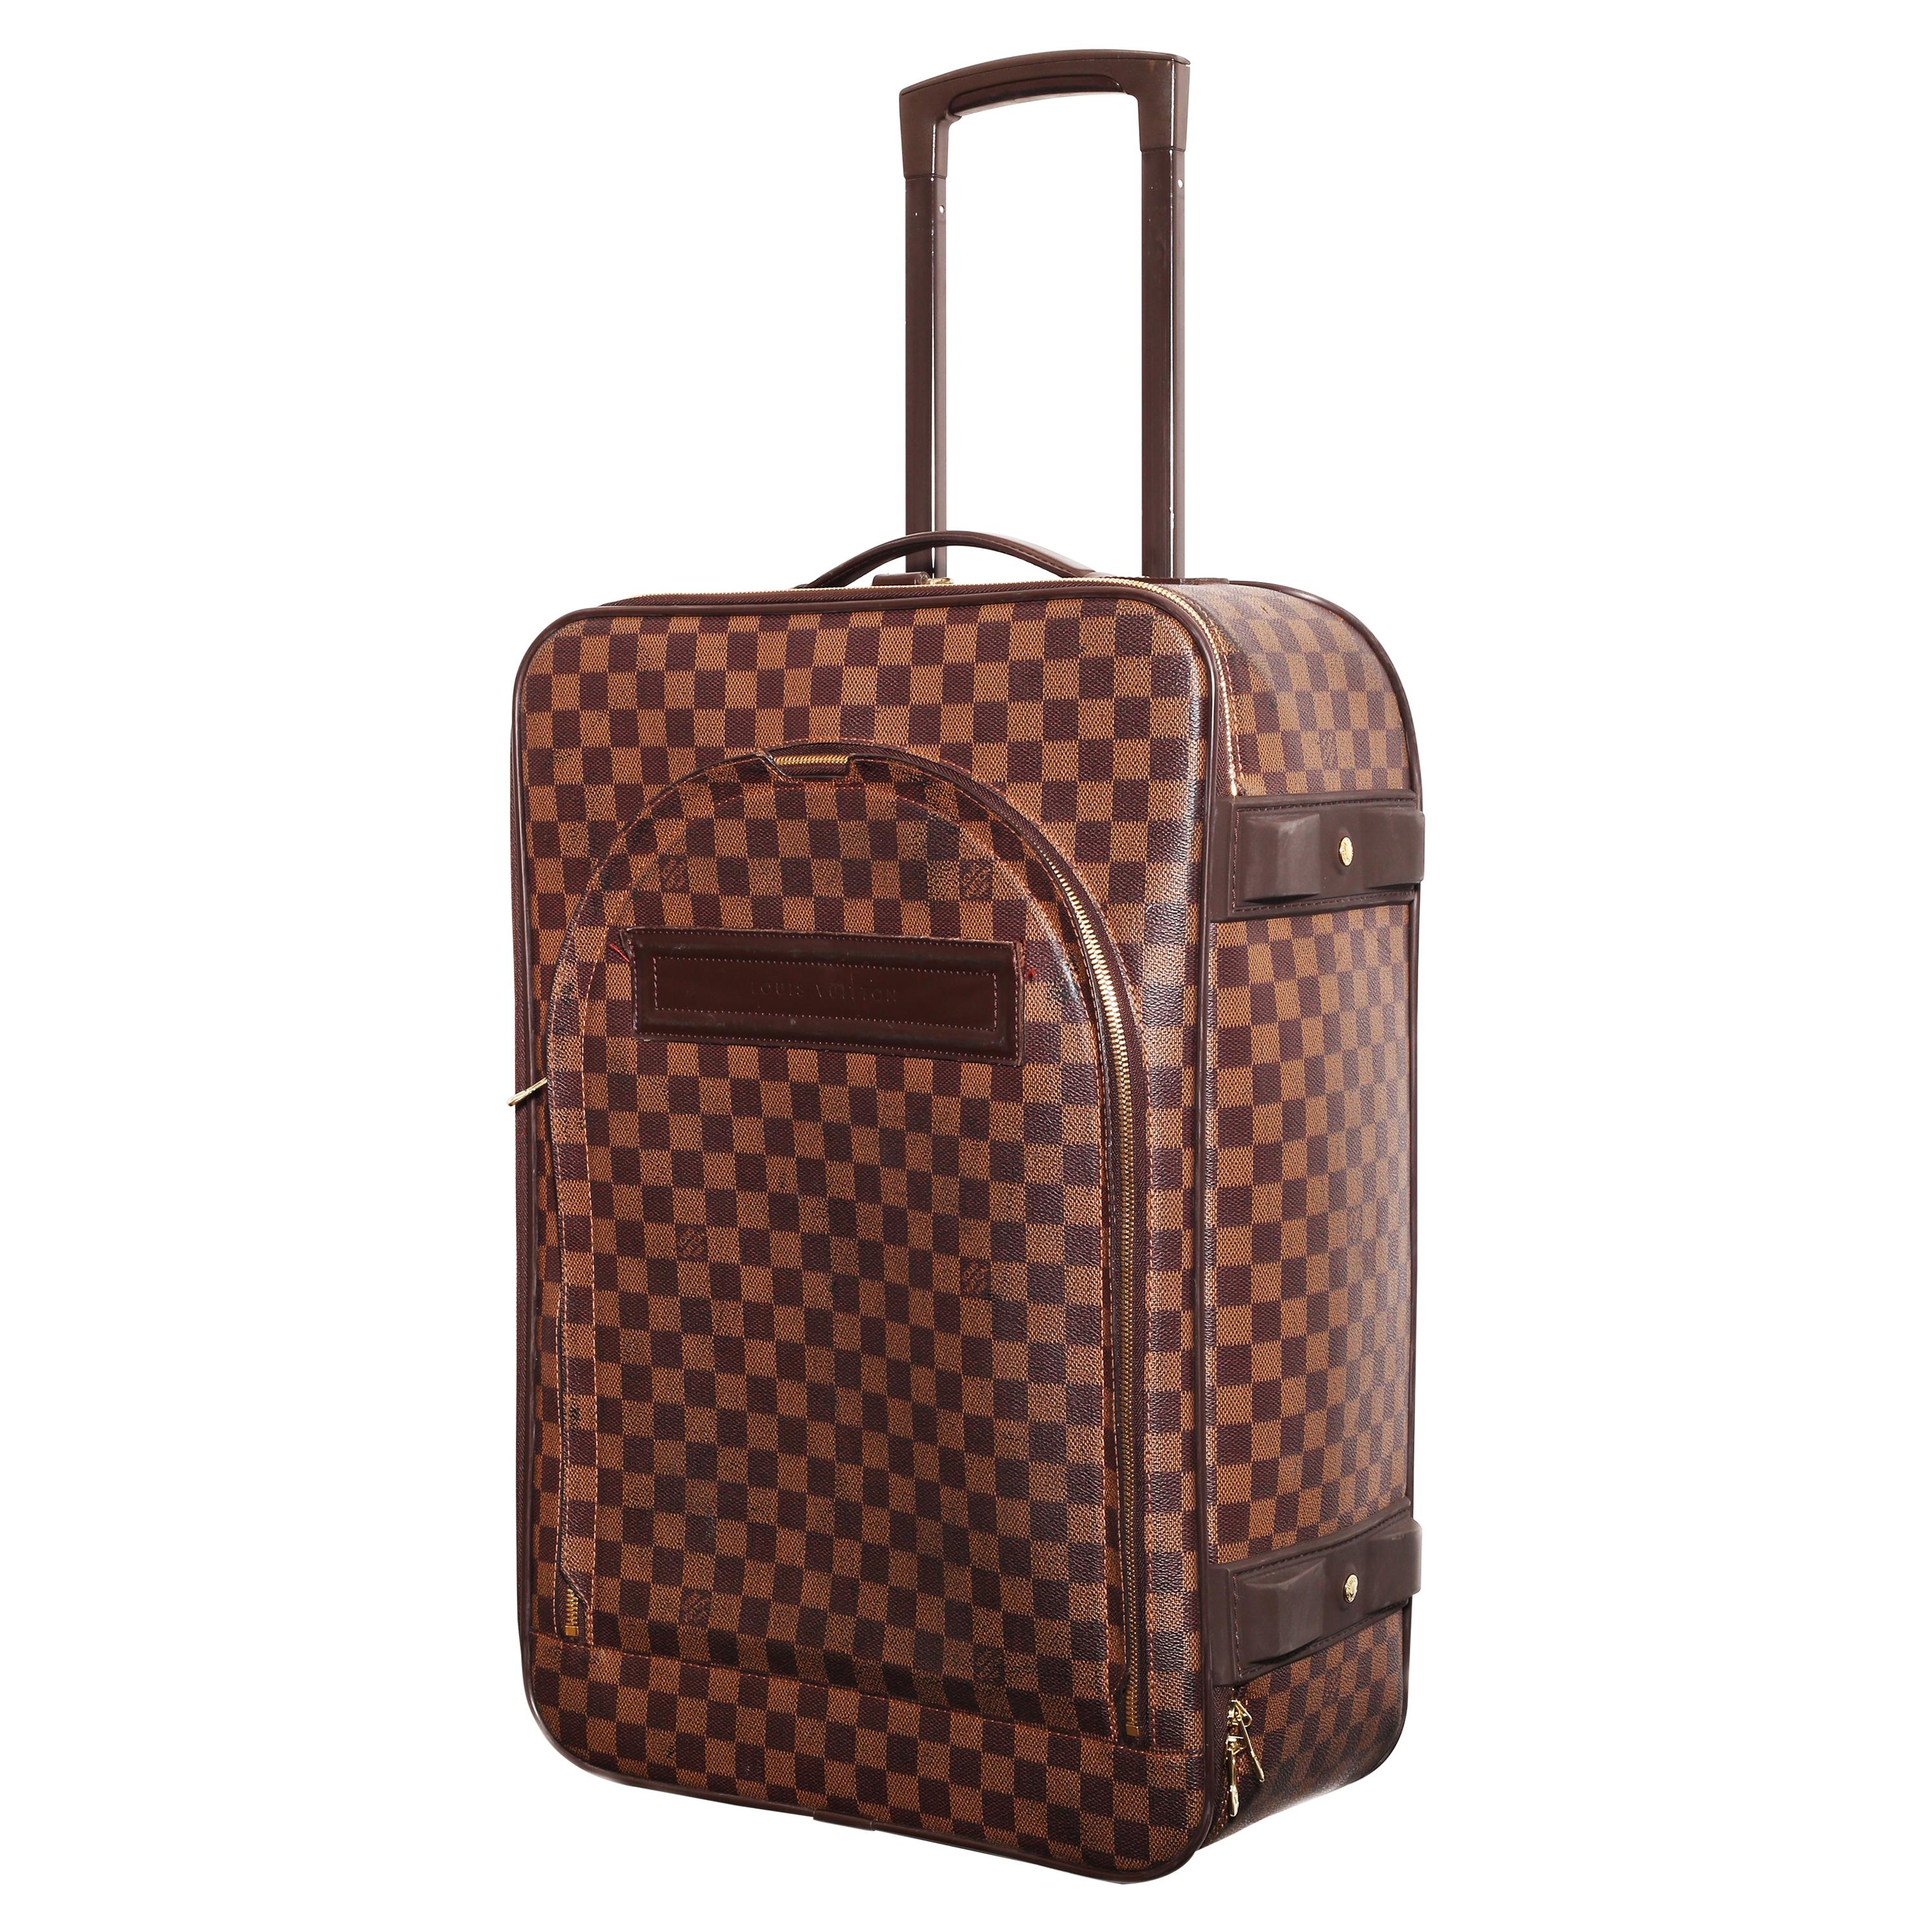 Louis Vuitton Damier Pégase 55 Travel Trolley Bag  Luggage For Sale